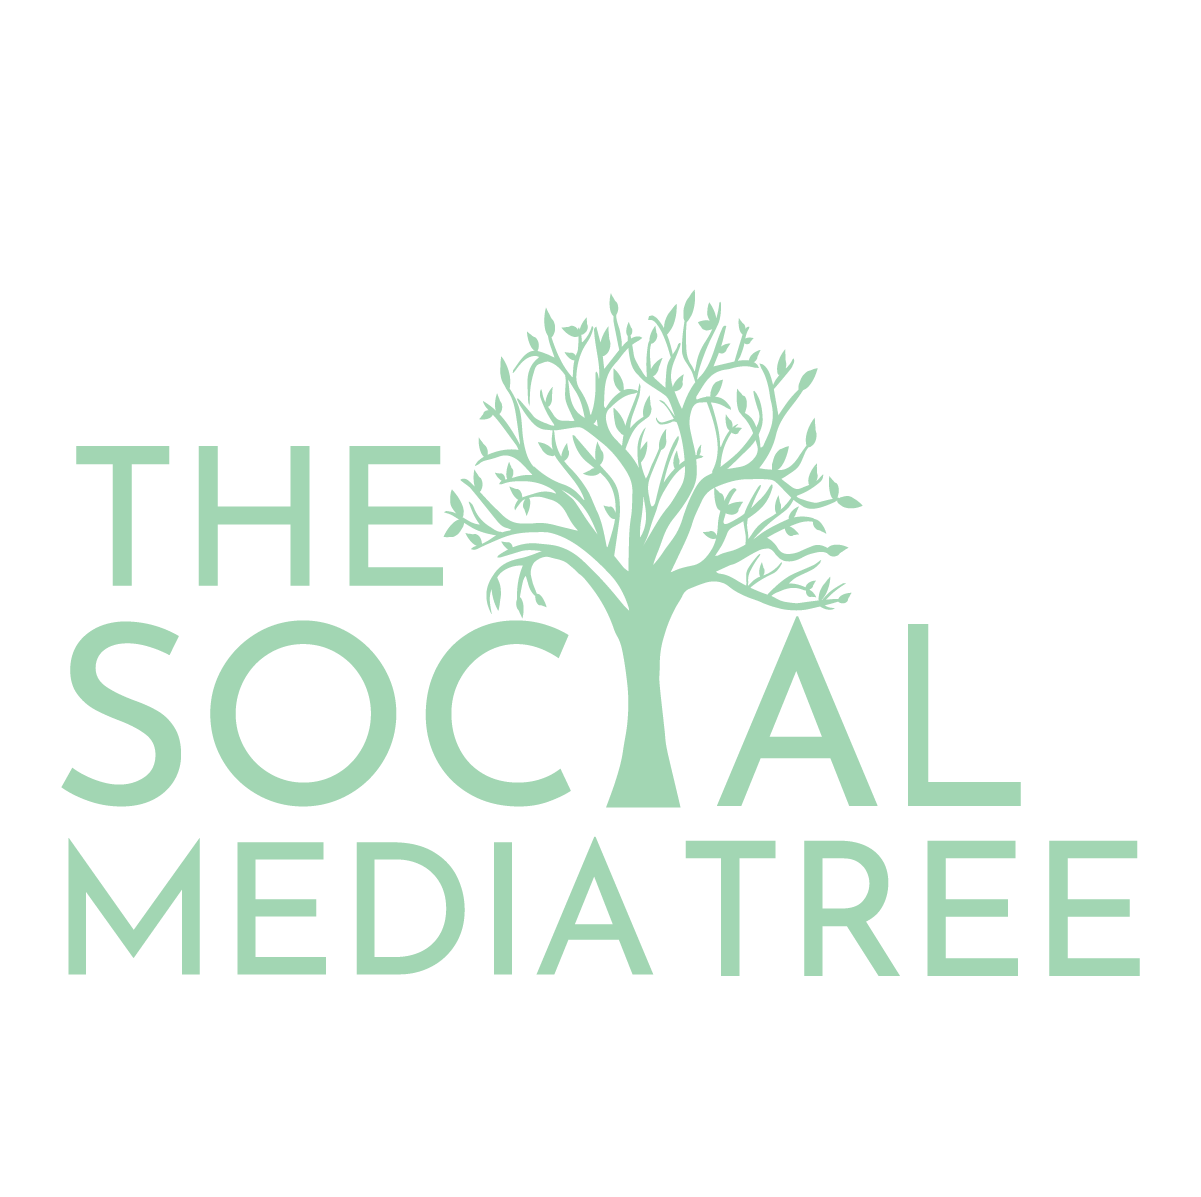 THE SOCIAL MEDIA TREE